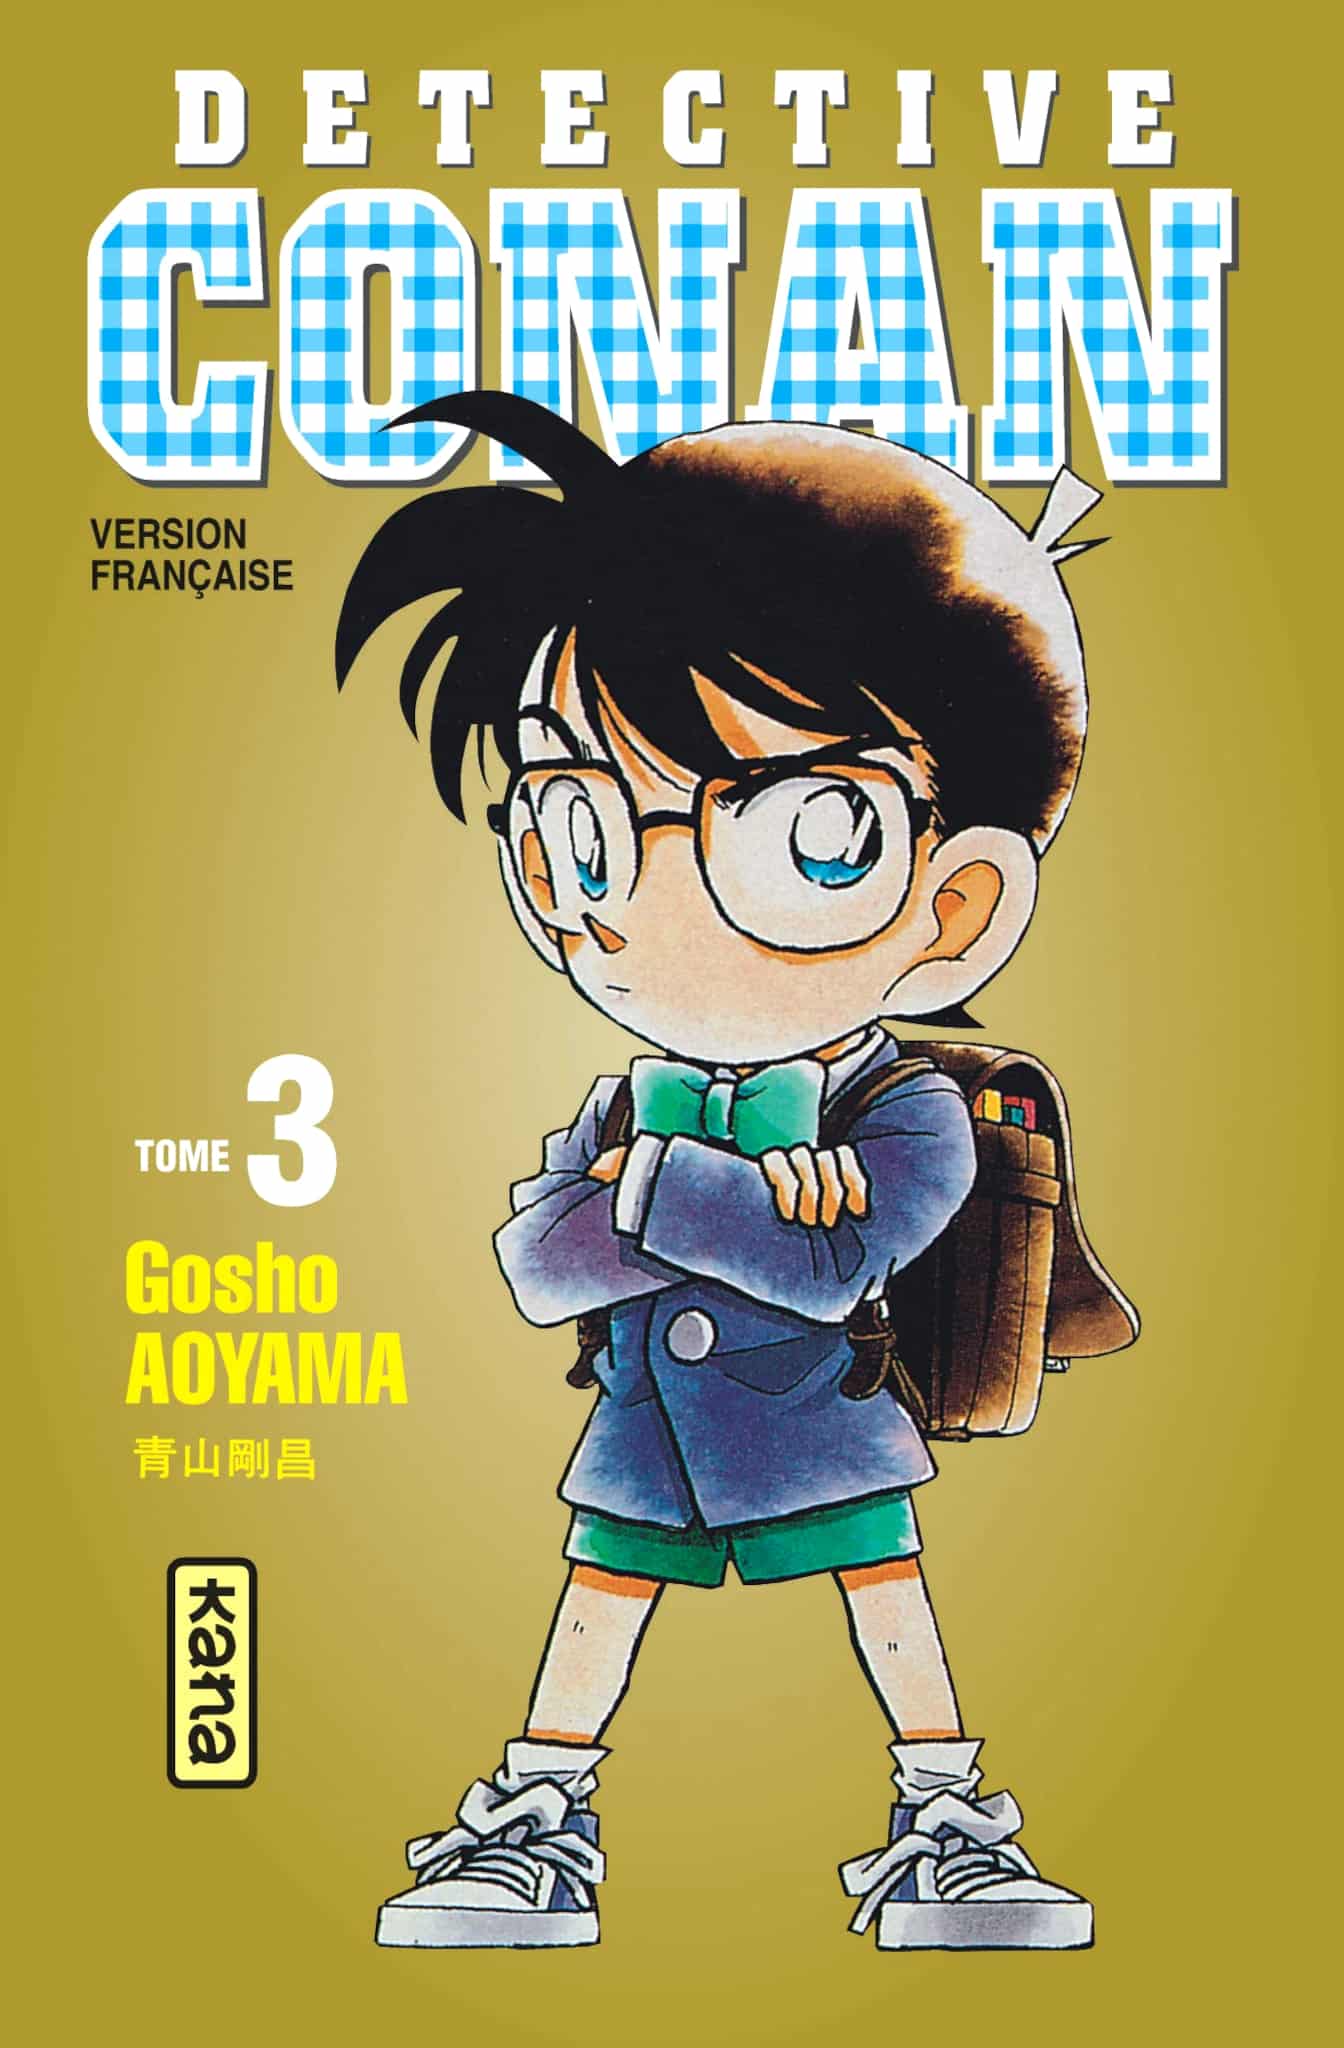 Tome 3 du manga Detective Conan